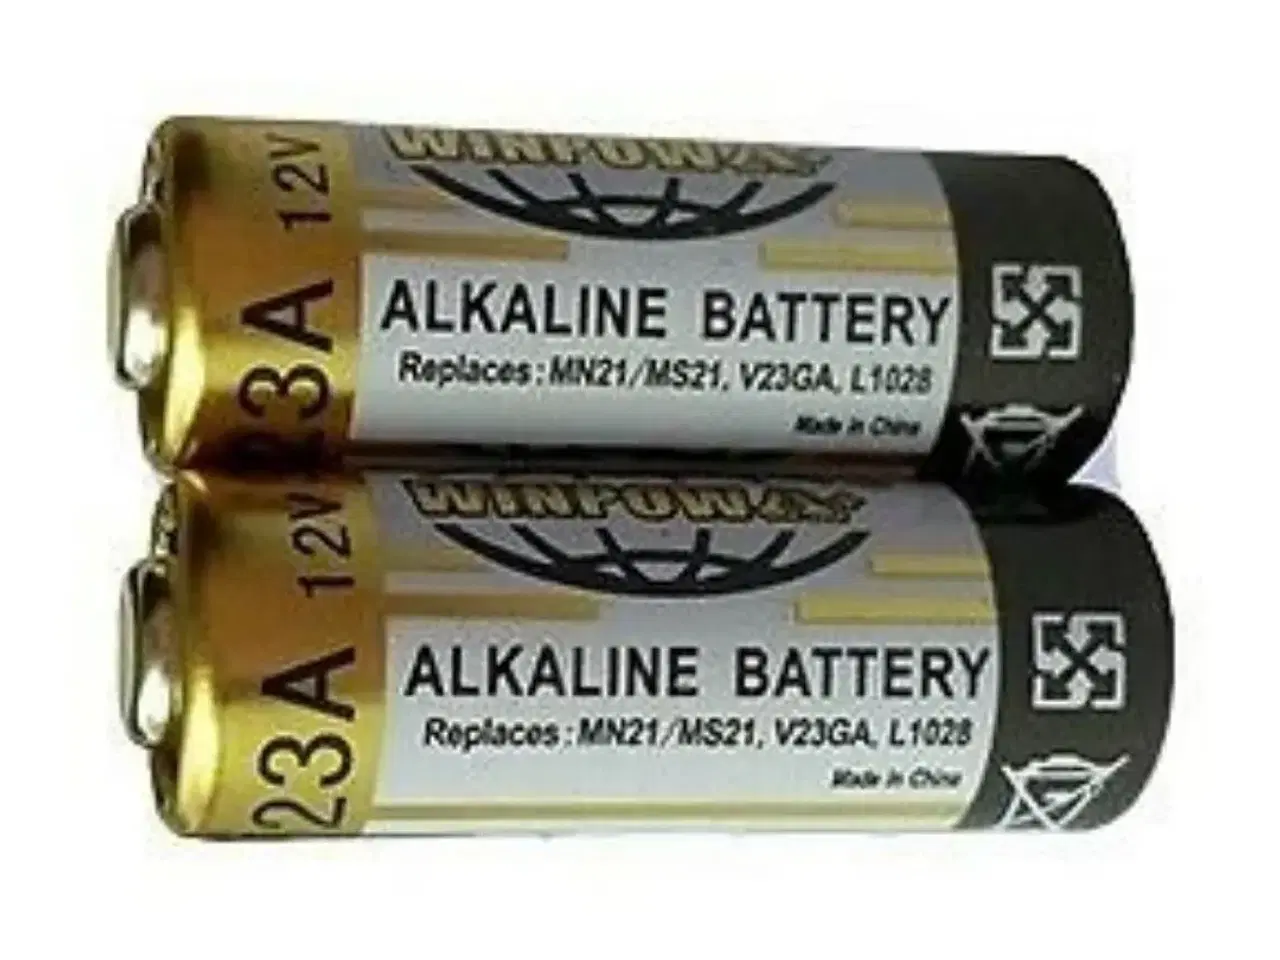 Billede 4 - Ca. 420 stk. alkaline 23A batterier